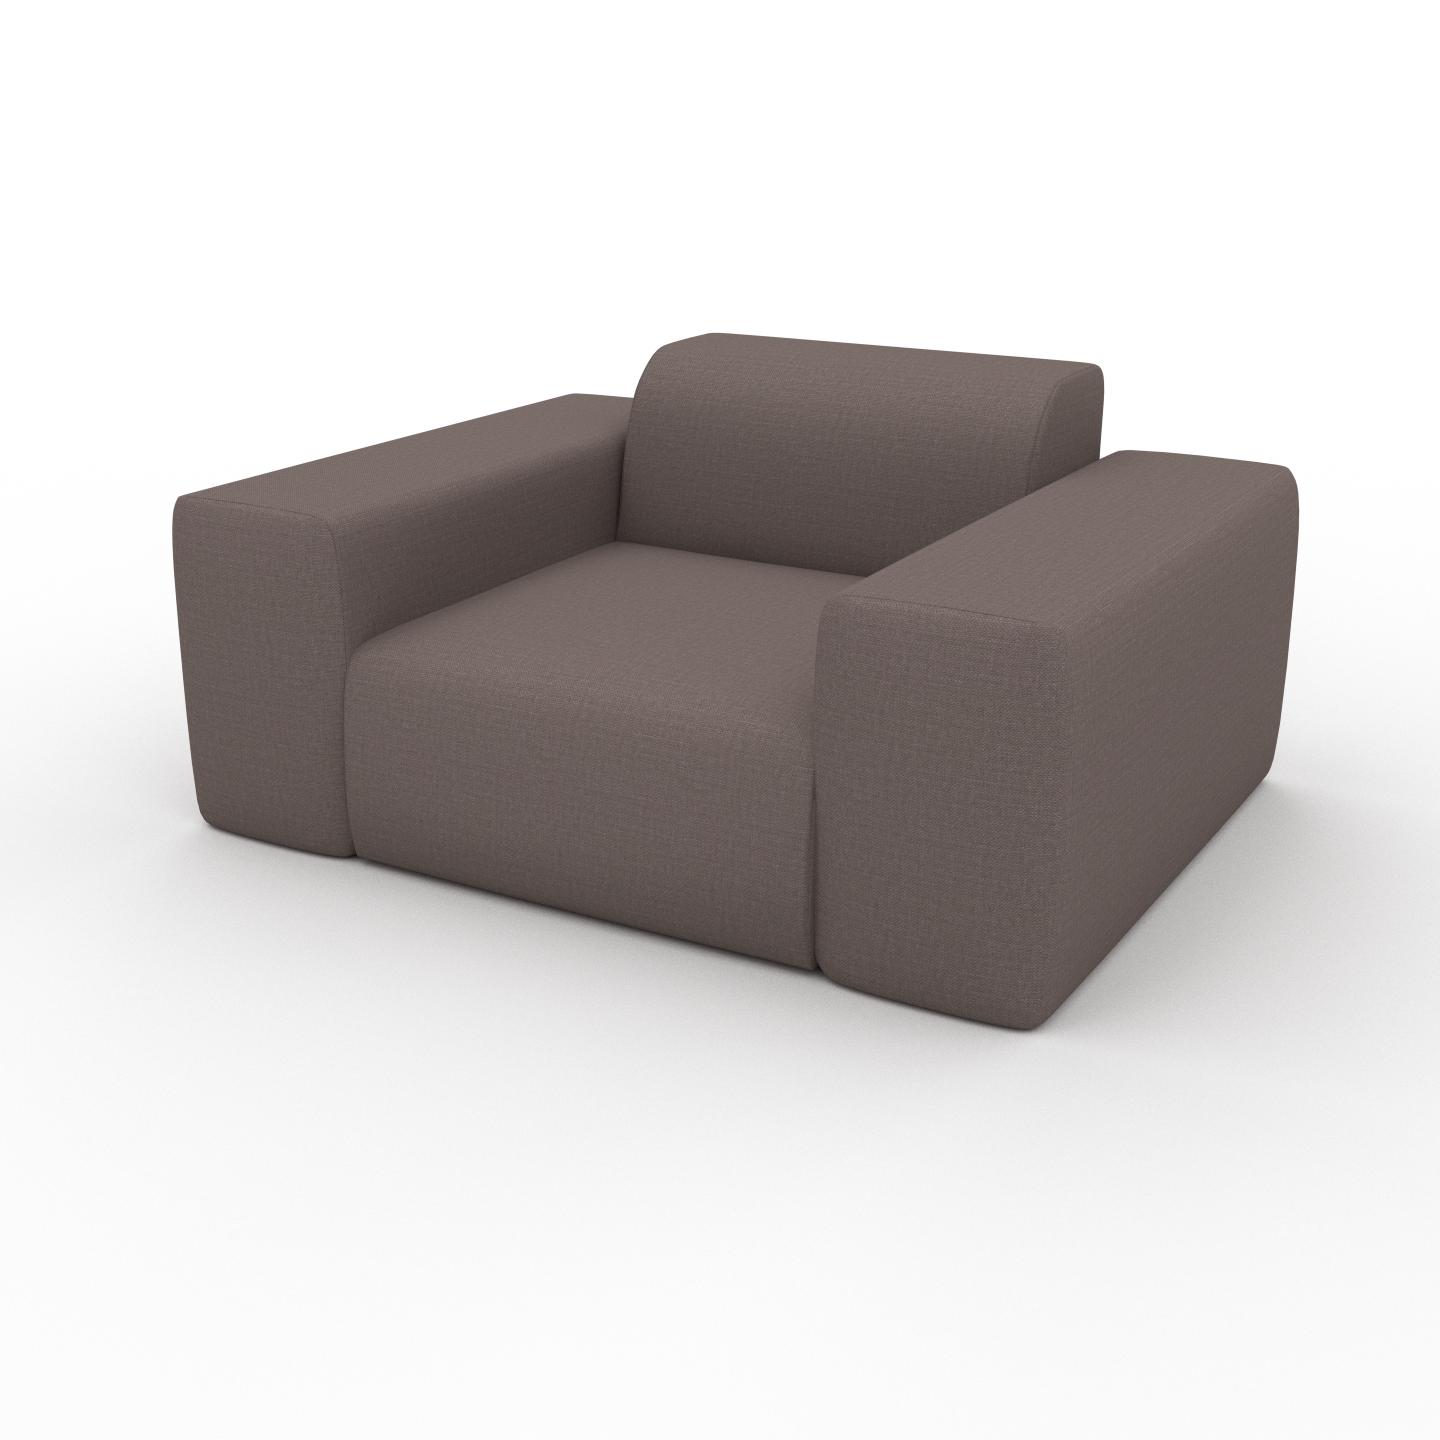 MYCS Sessel Taupegrau - Eleganter Sessel: Hochwertige Qualität, einzigartiges Design - 141 x 72 x 107 cm, Individuell konfigurierbar